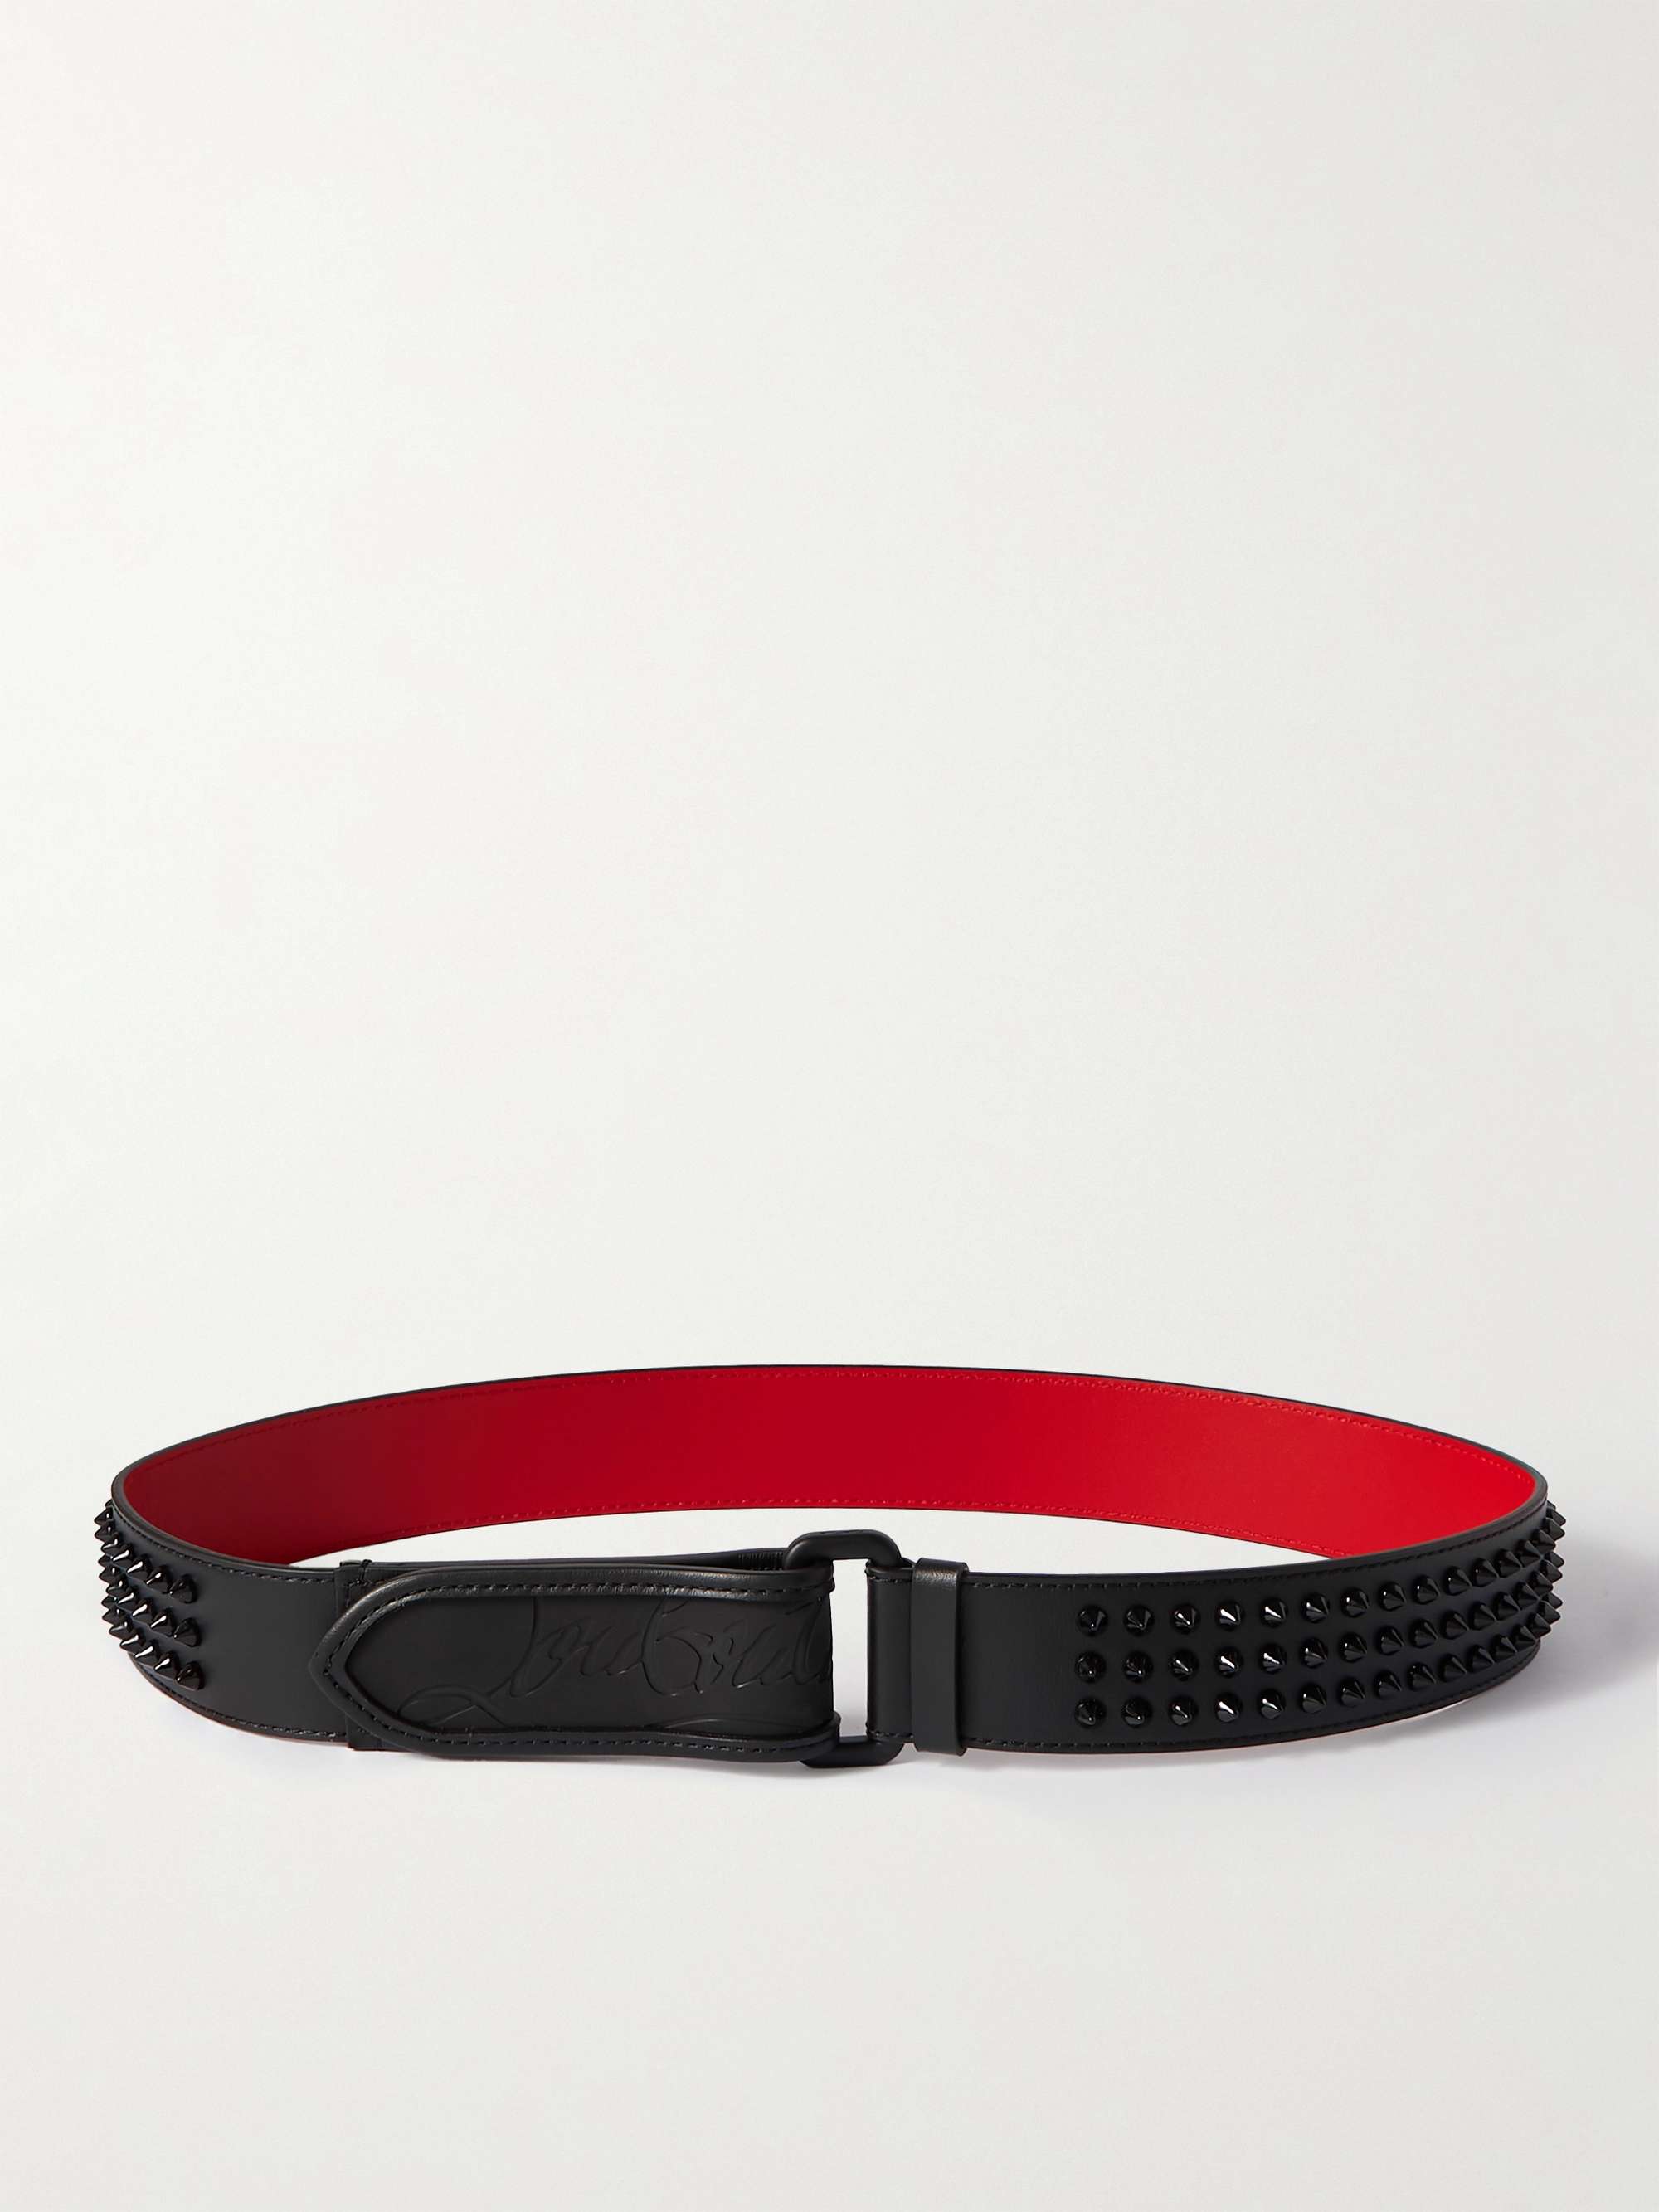 Christian Louboutin Men's Loubi Spiked Leather Belt